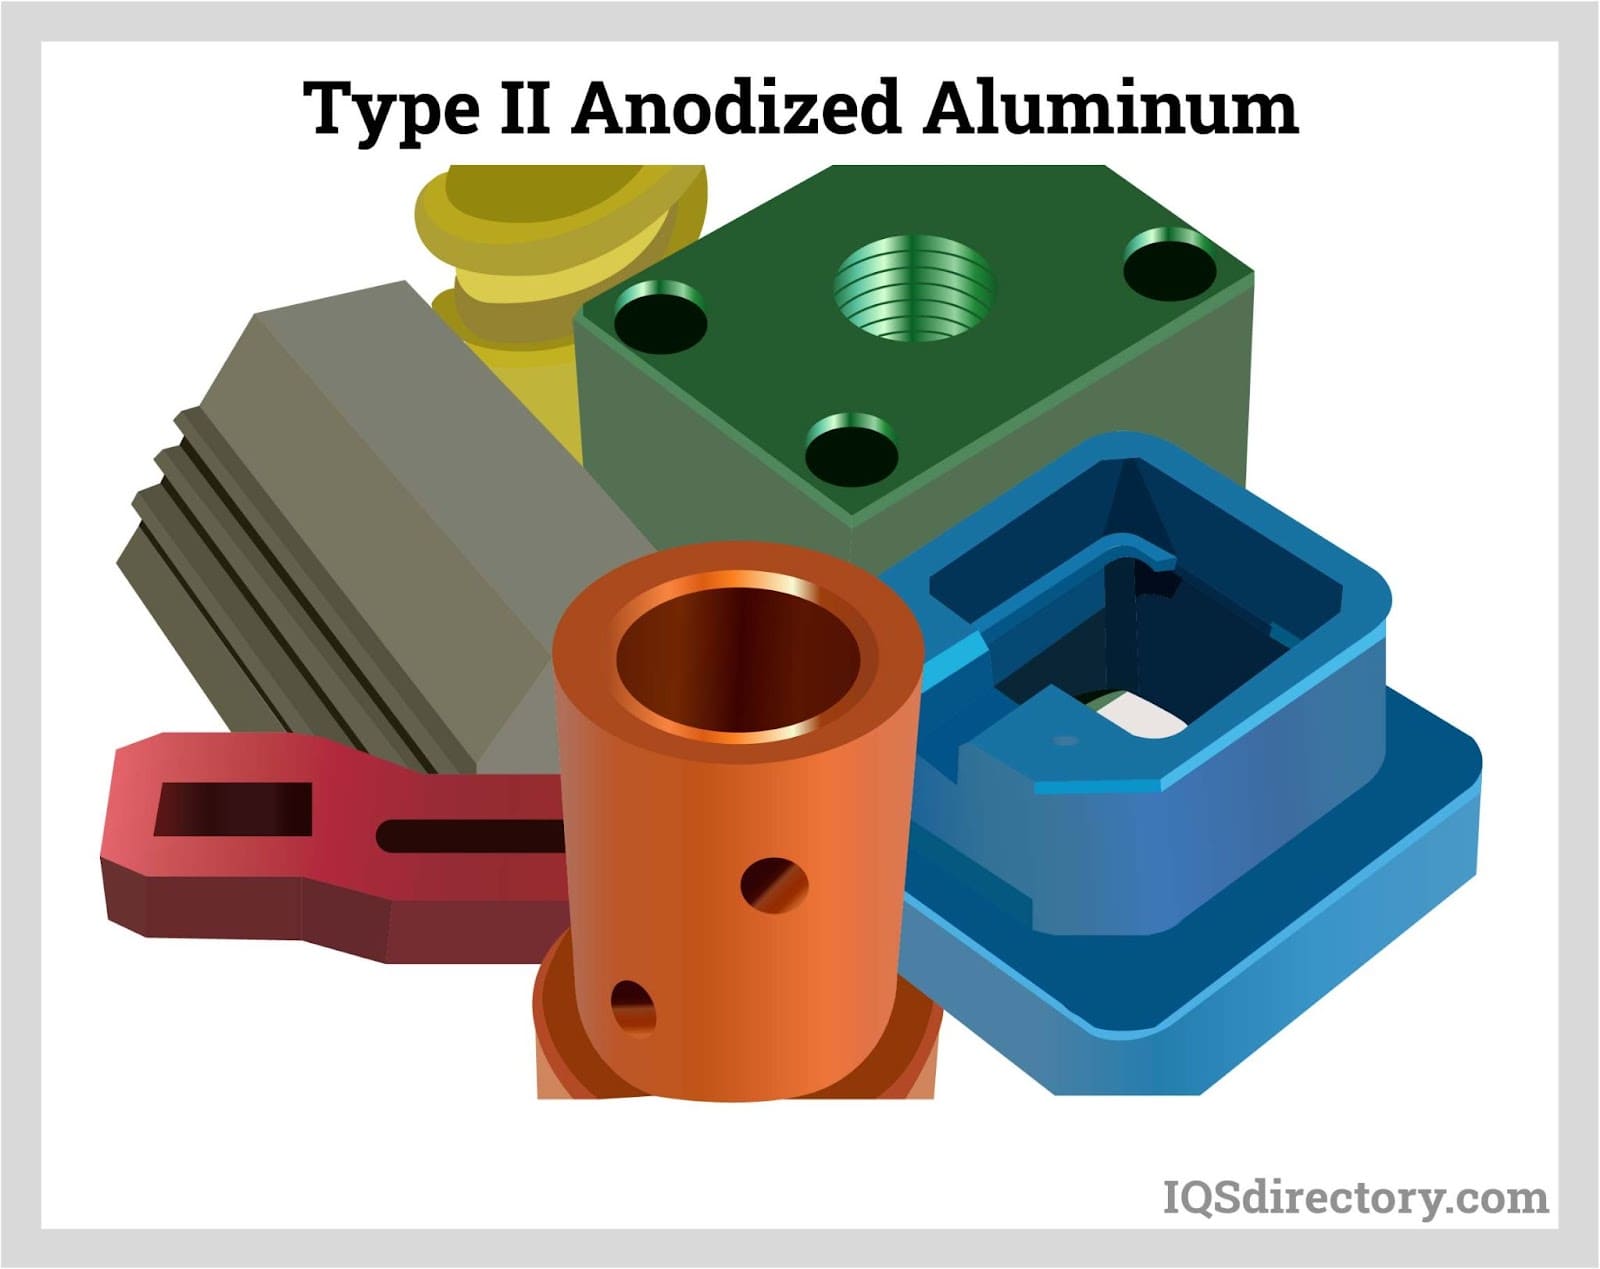 Type II Anodized Aluminum